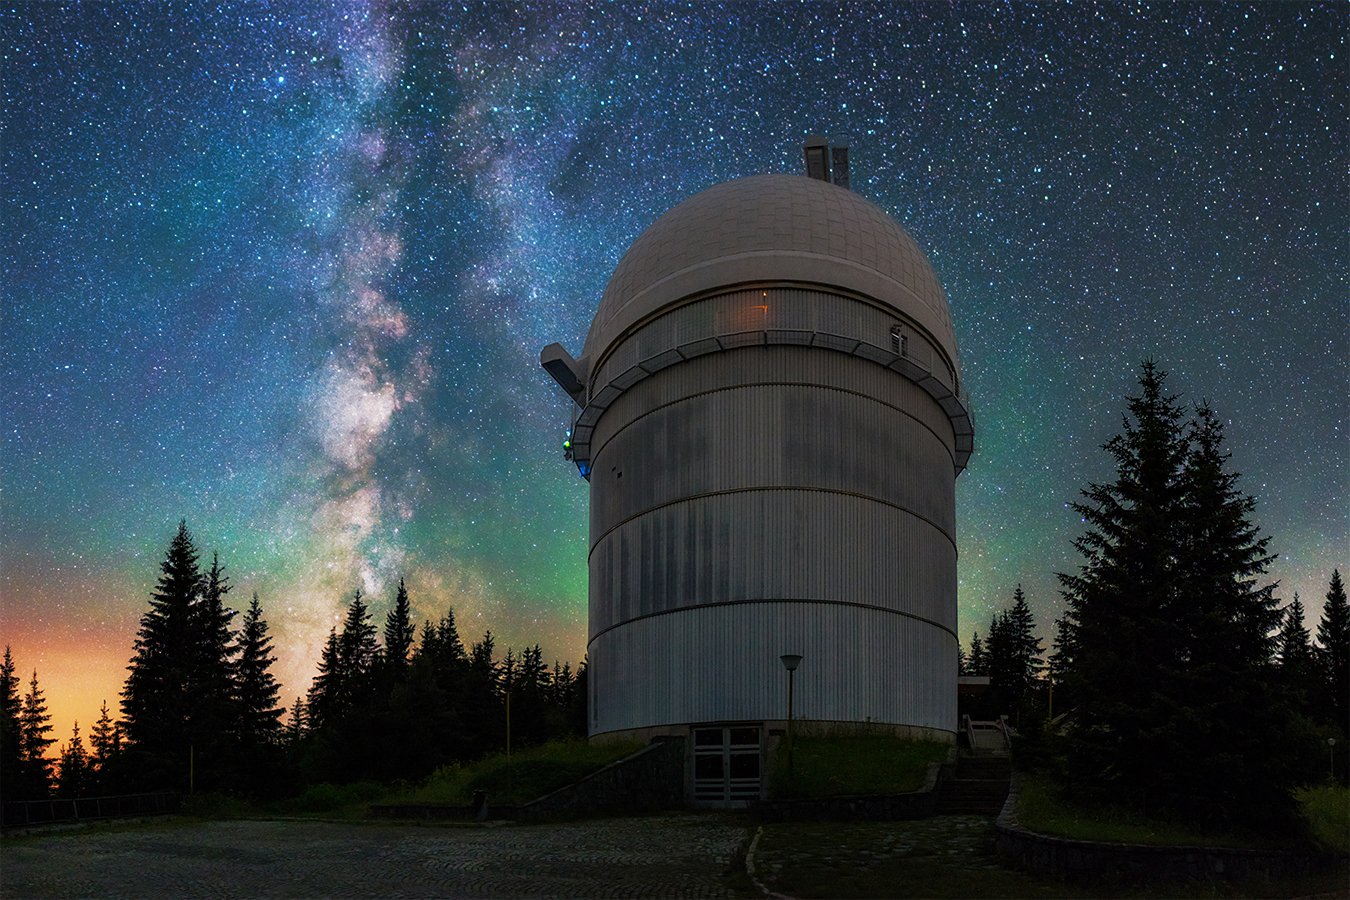 carl zeiss, national astronomical observatory, telescope, milky way, ritchey-chretien-coude, nao rozhen, Ivan Padarev